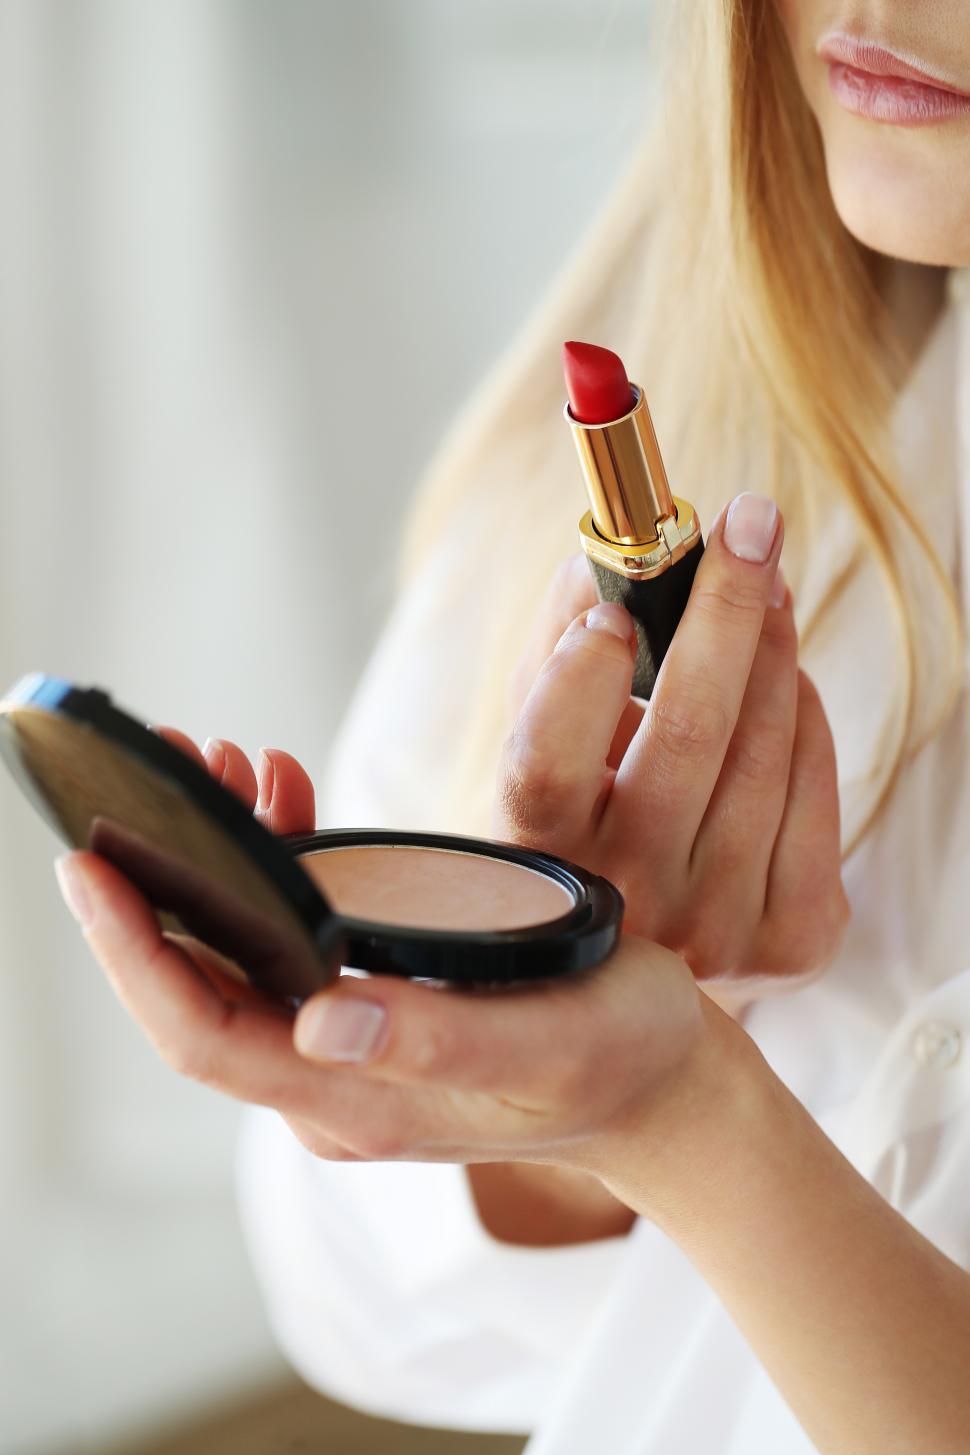 Free Image of Woman applying makeup 